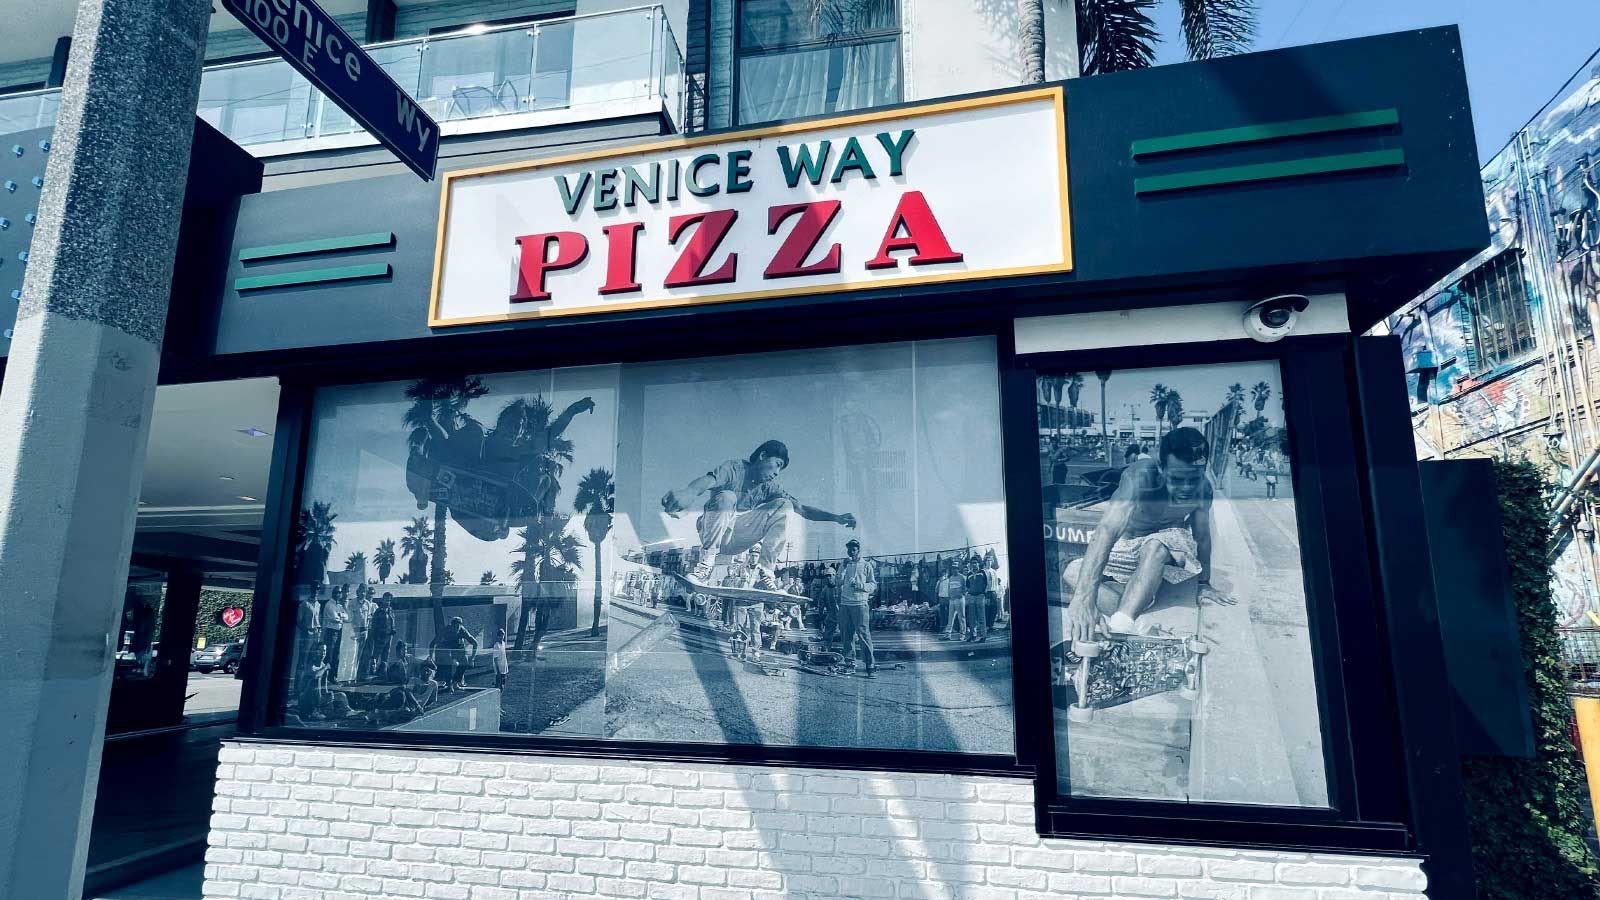 Venice Way Pizza restaurant signs